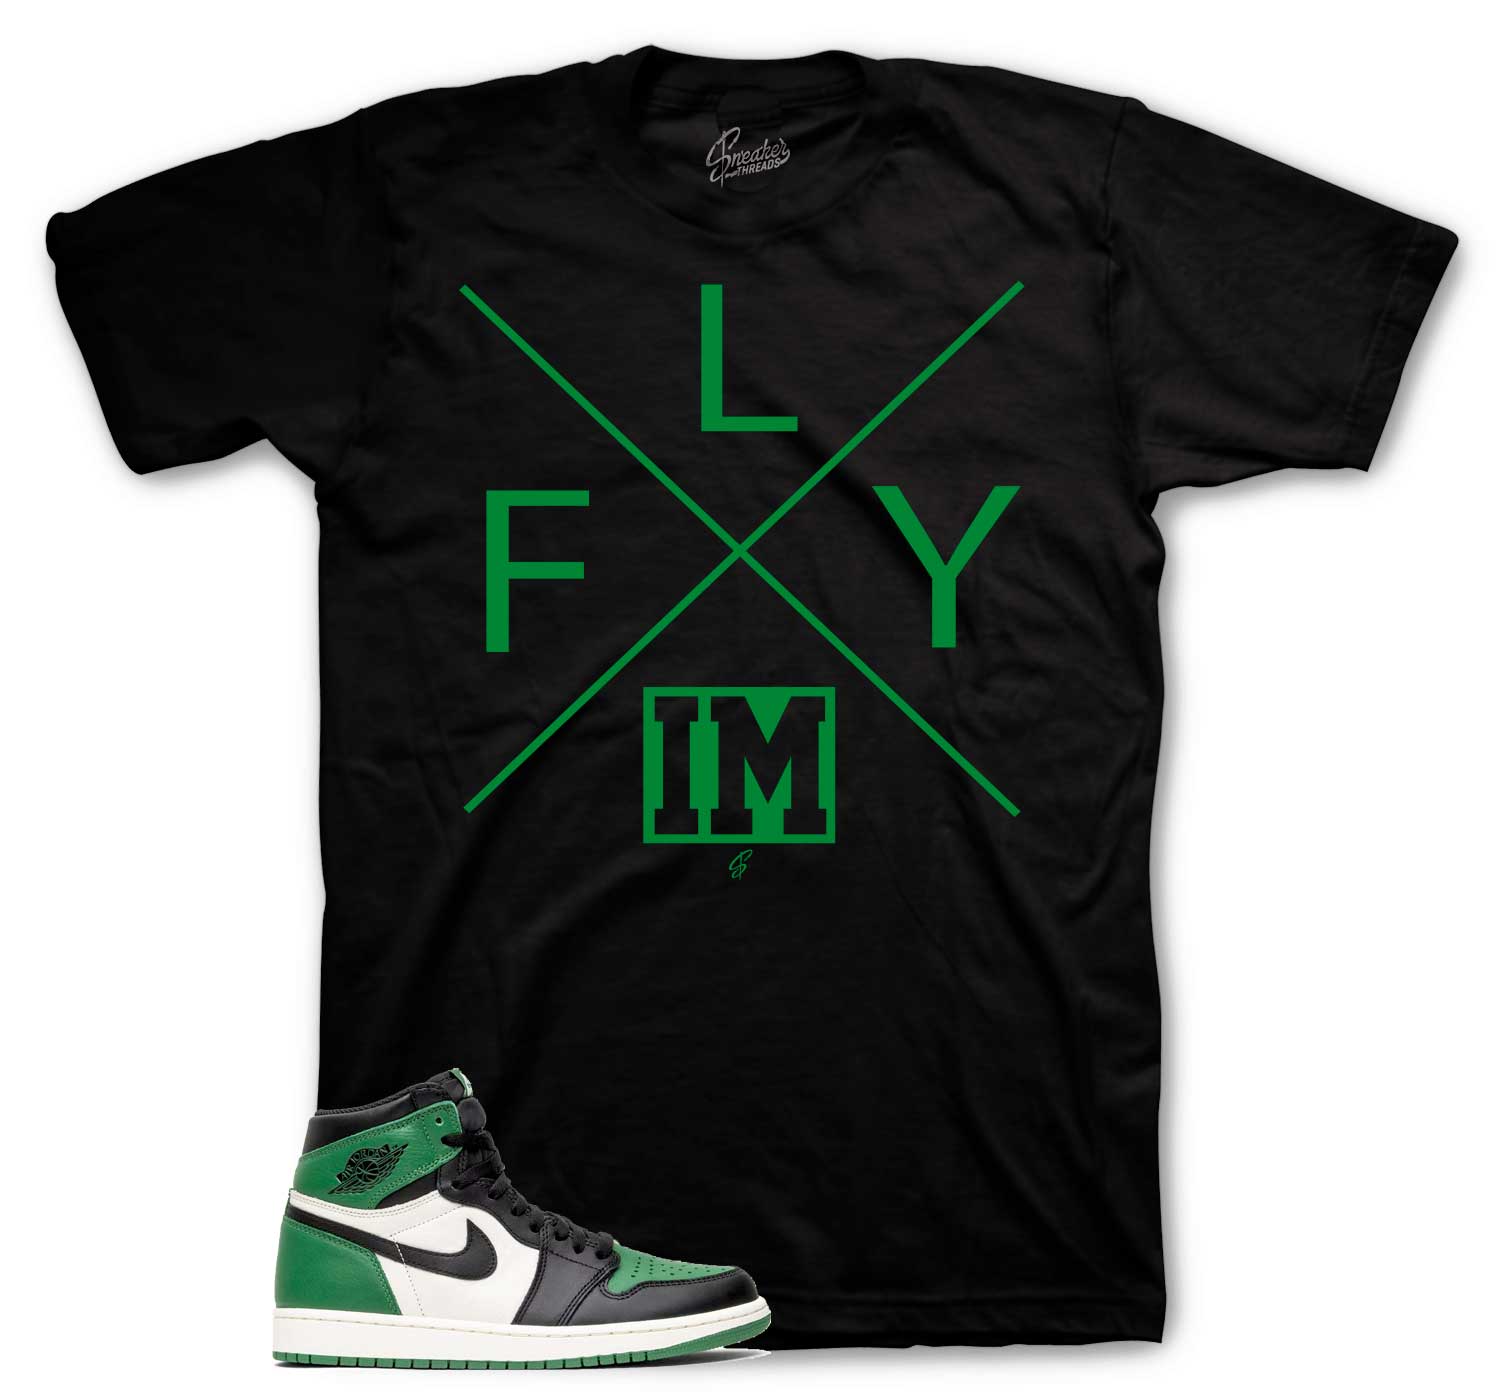 Retro 1 Lucky Green Shirt - I'm Fly - Black